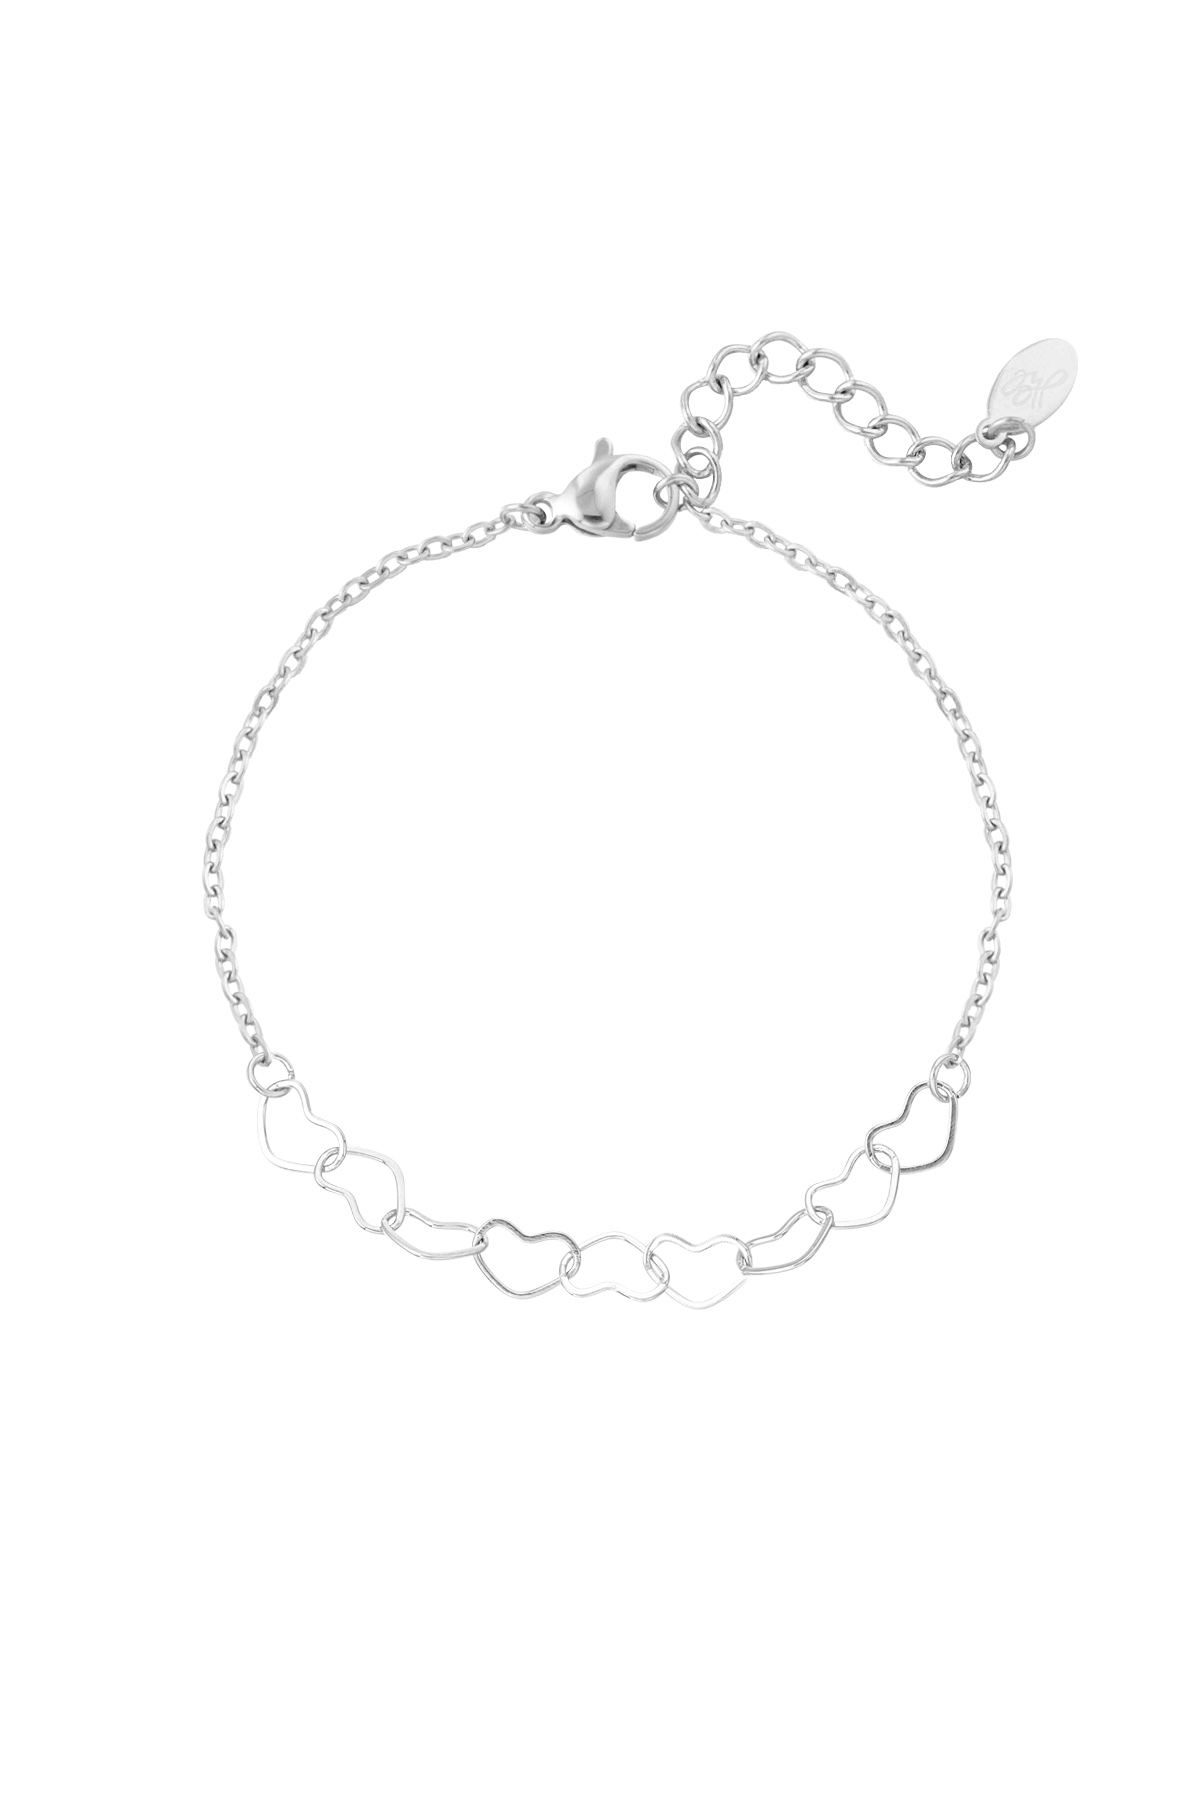 Bracelet linked hearts - silver